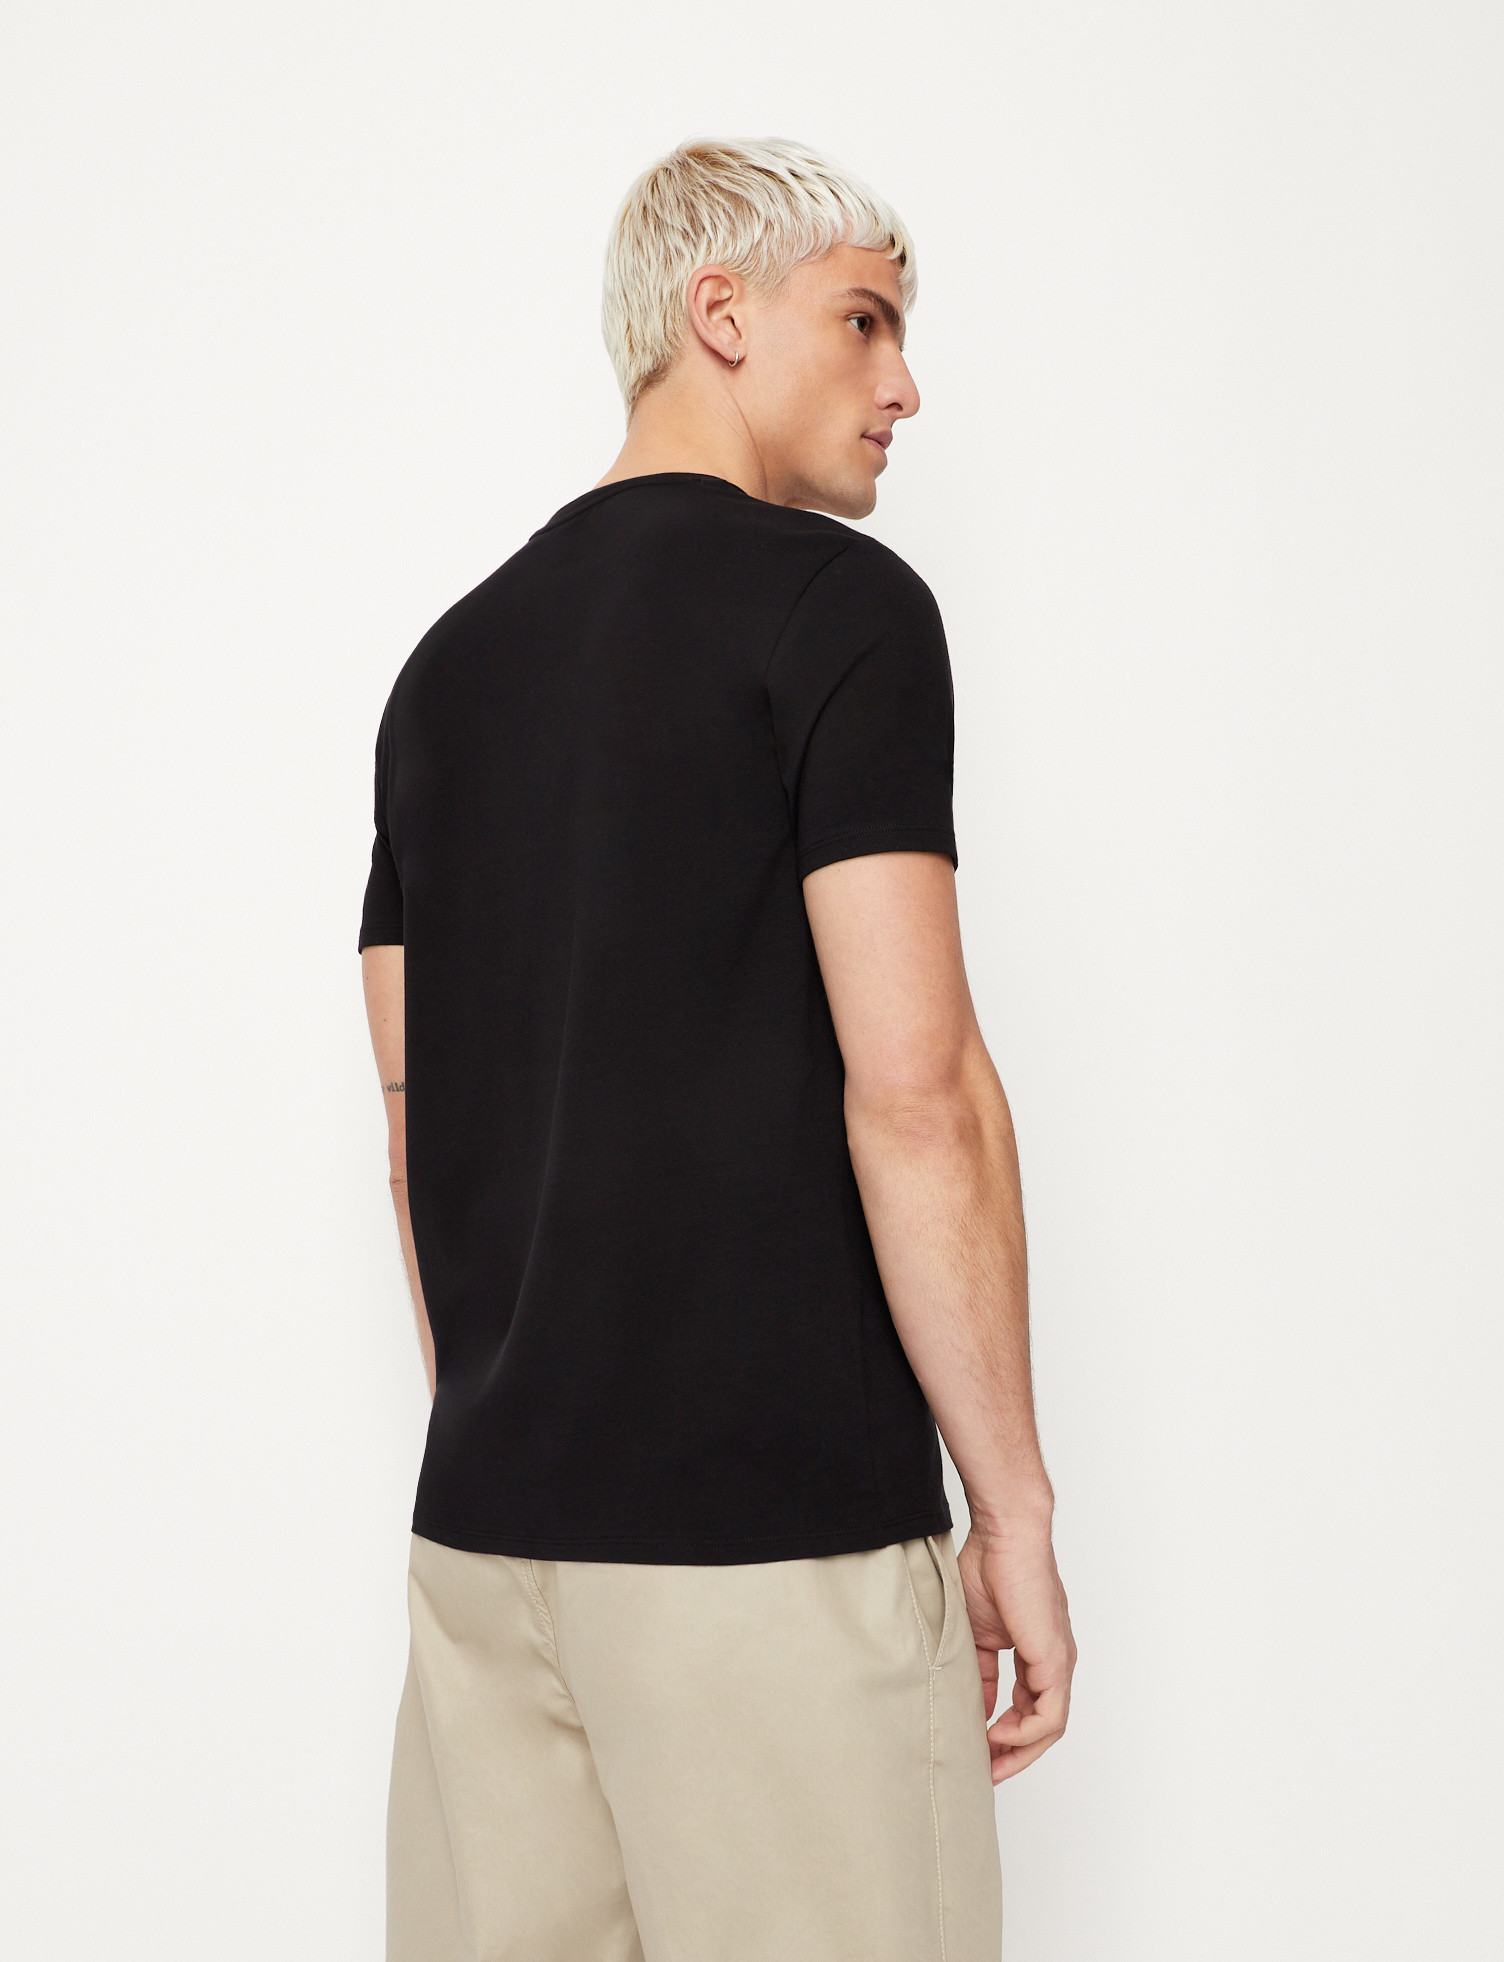 Armani Exchange - Slim fit printed T-shirt, Black, large image number 2